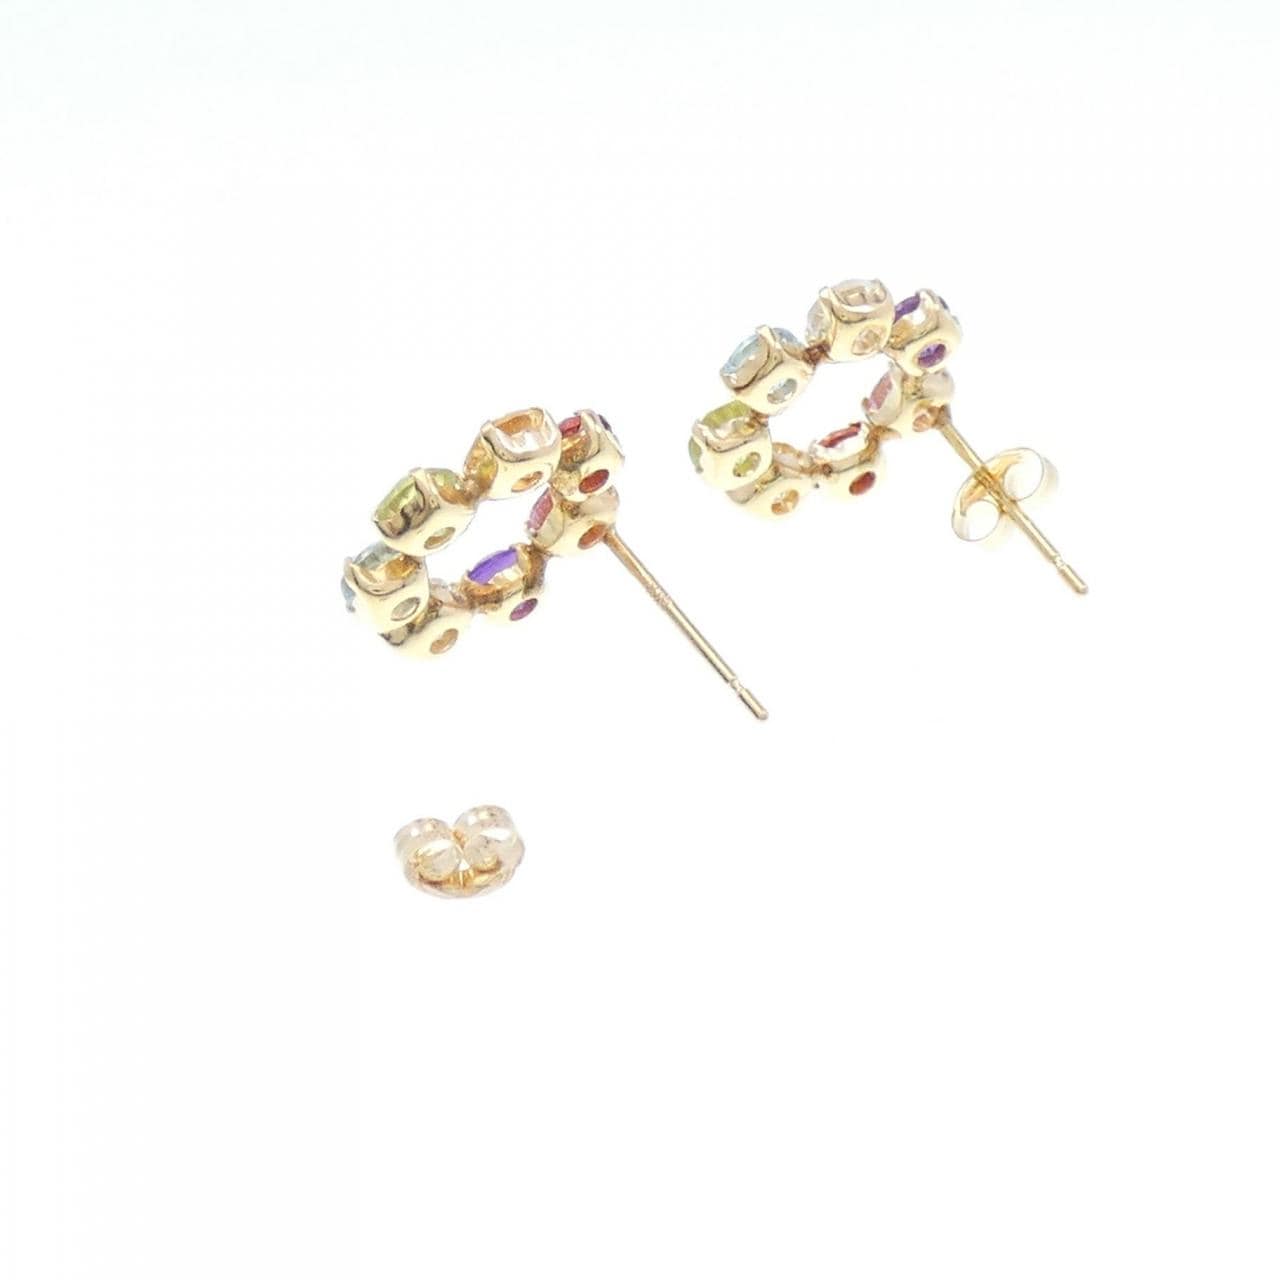 K18YG colored stone earrings